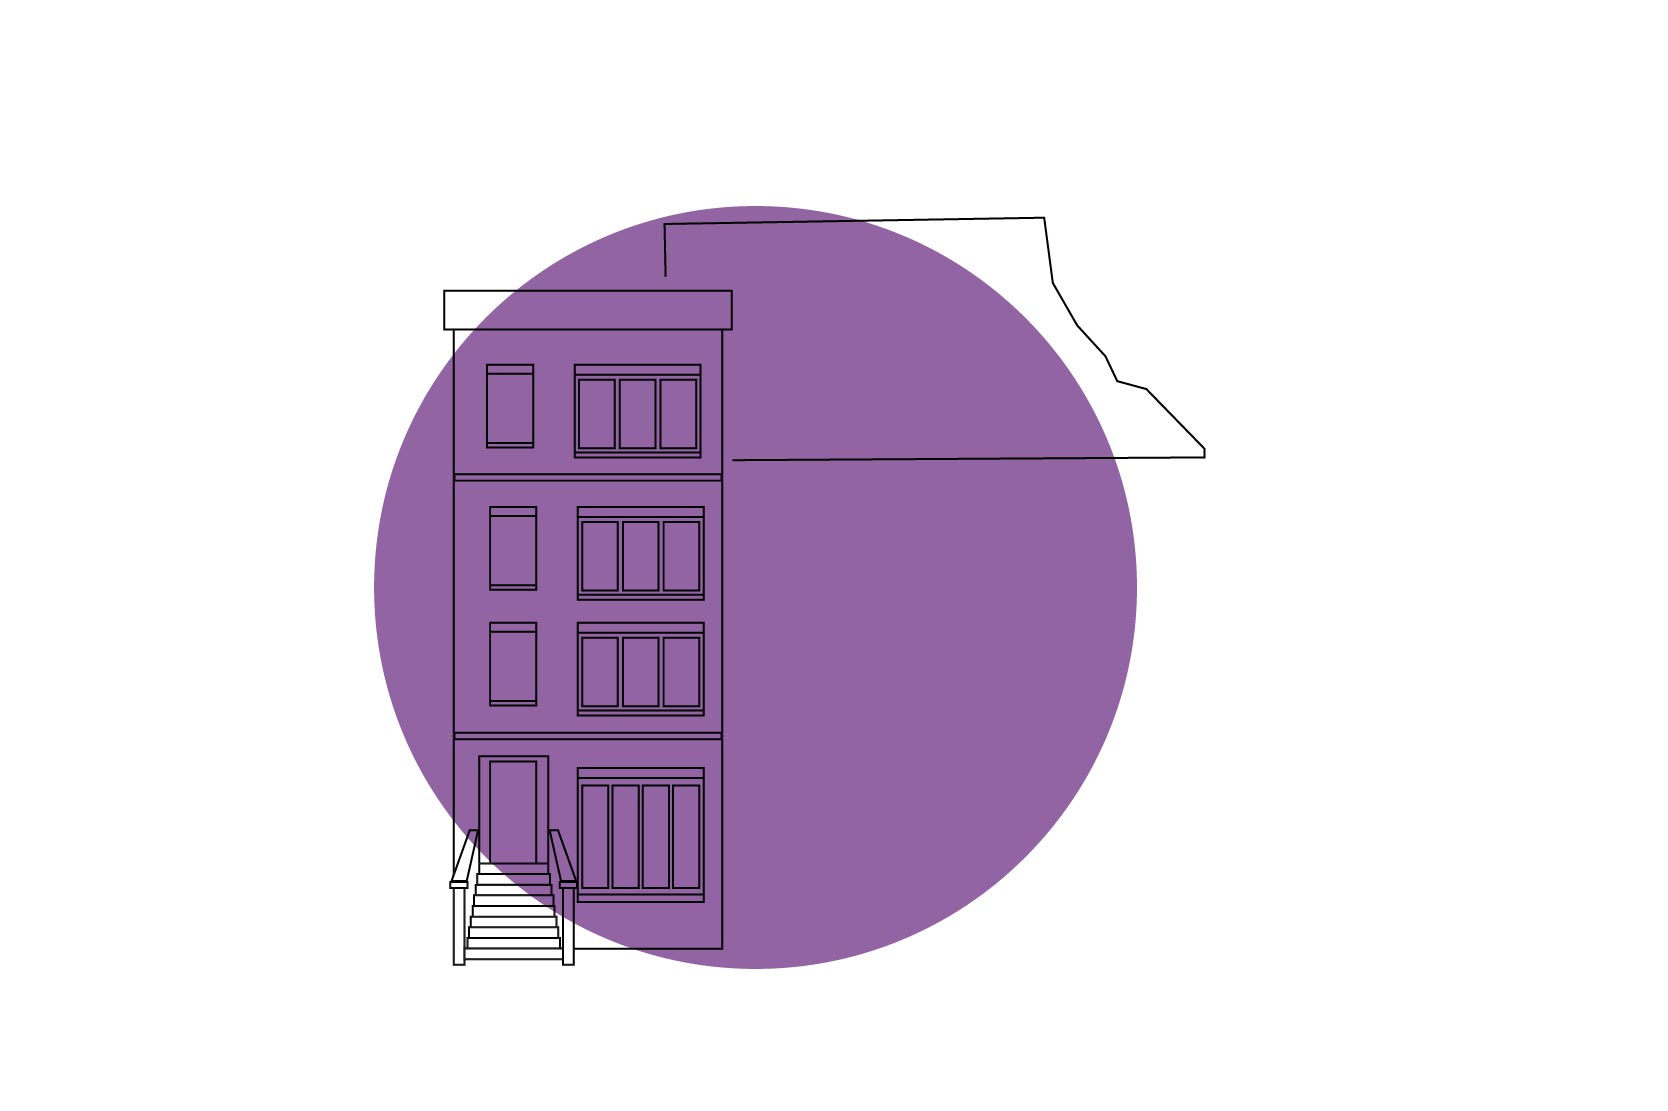 Illustration of Avondale Home and Neighborhood Outline